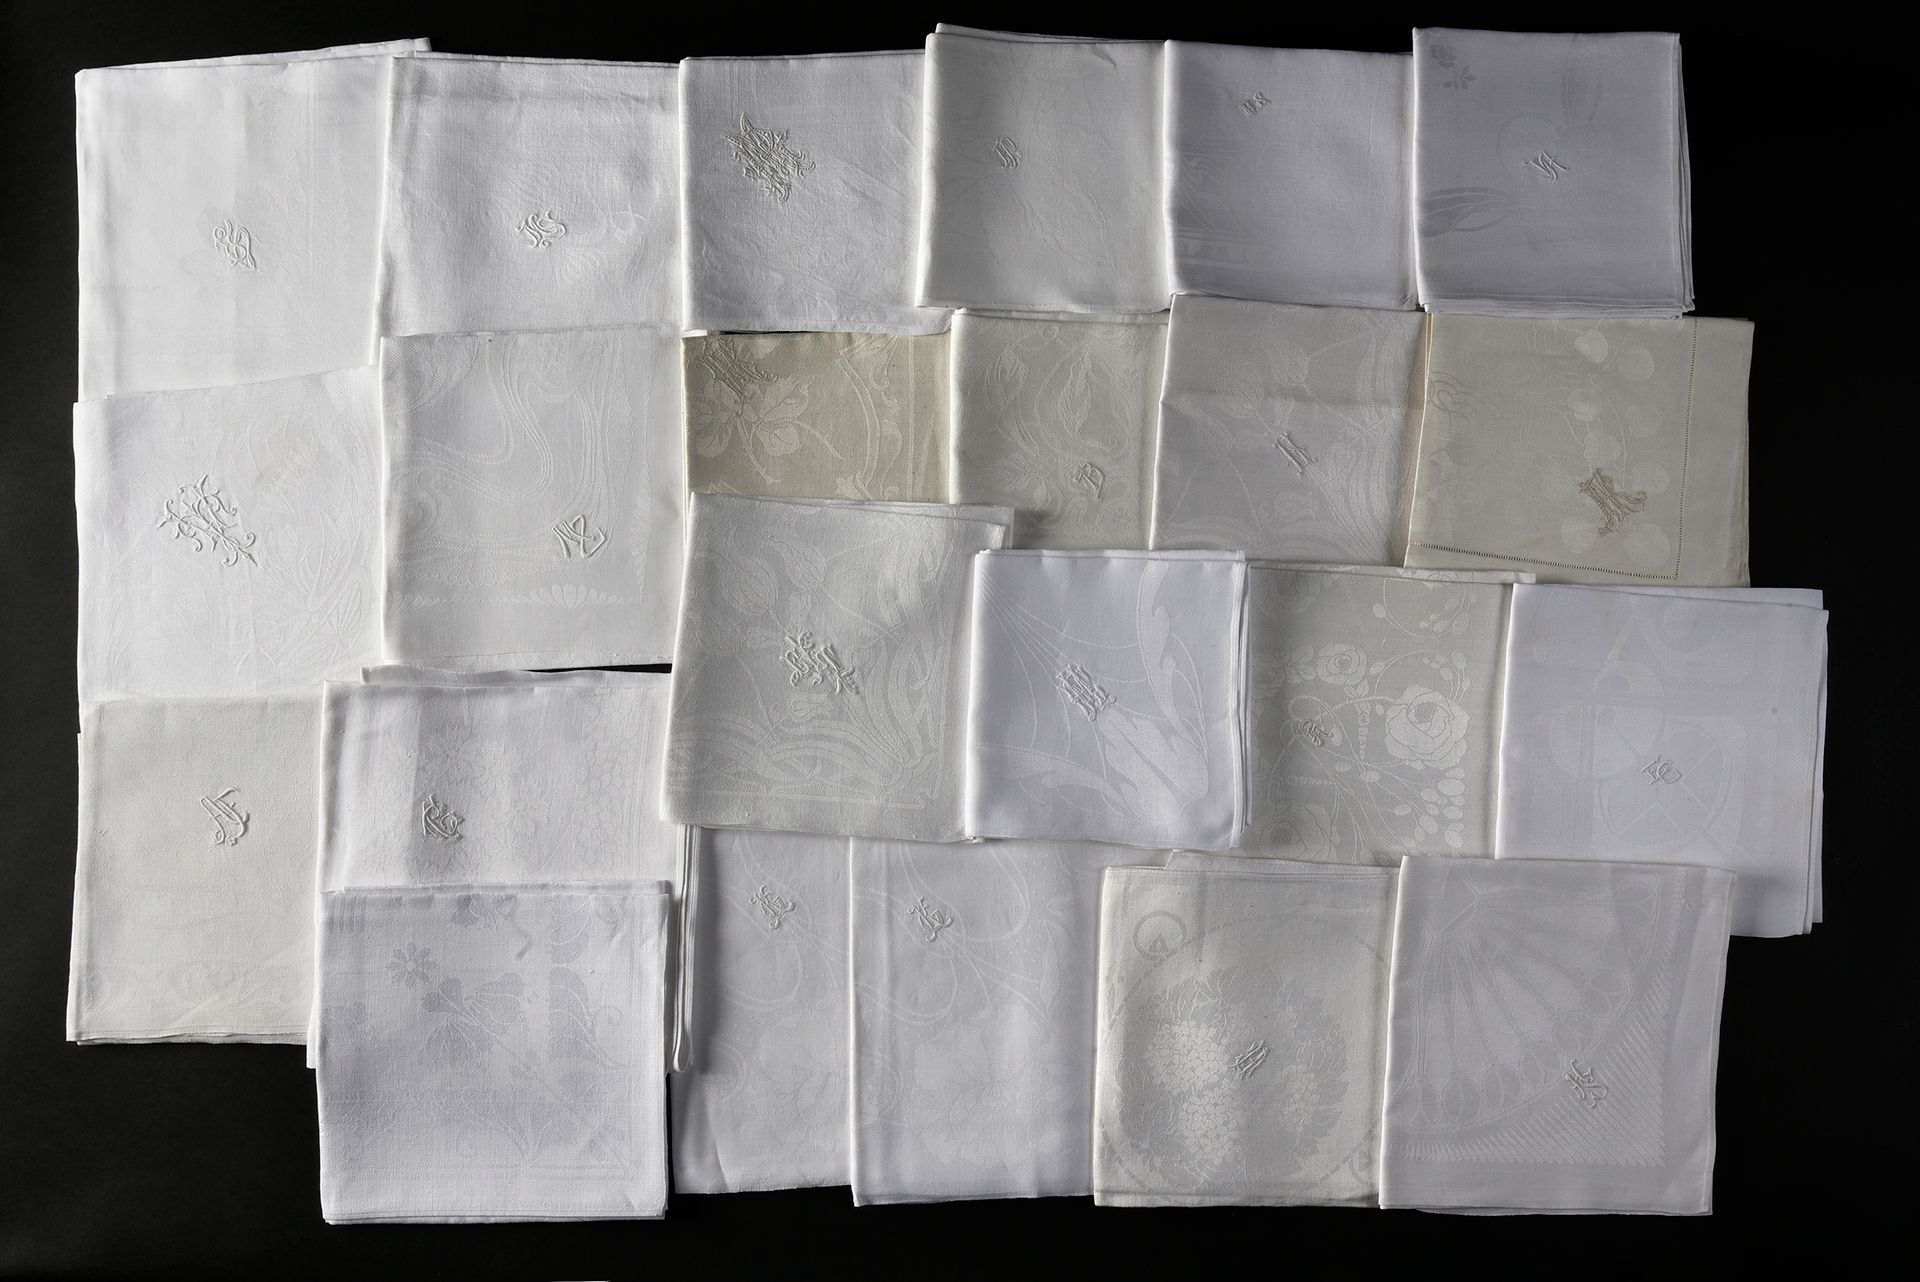 Null Damask napkins, circa 1900 and 1930.
Twenty napkins with beautiful Art Nouv&hellip;